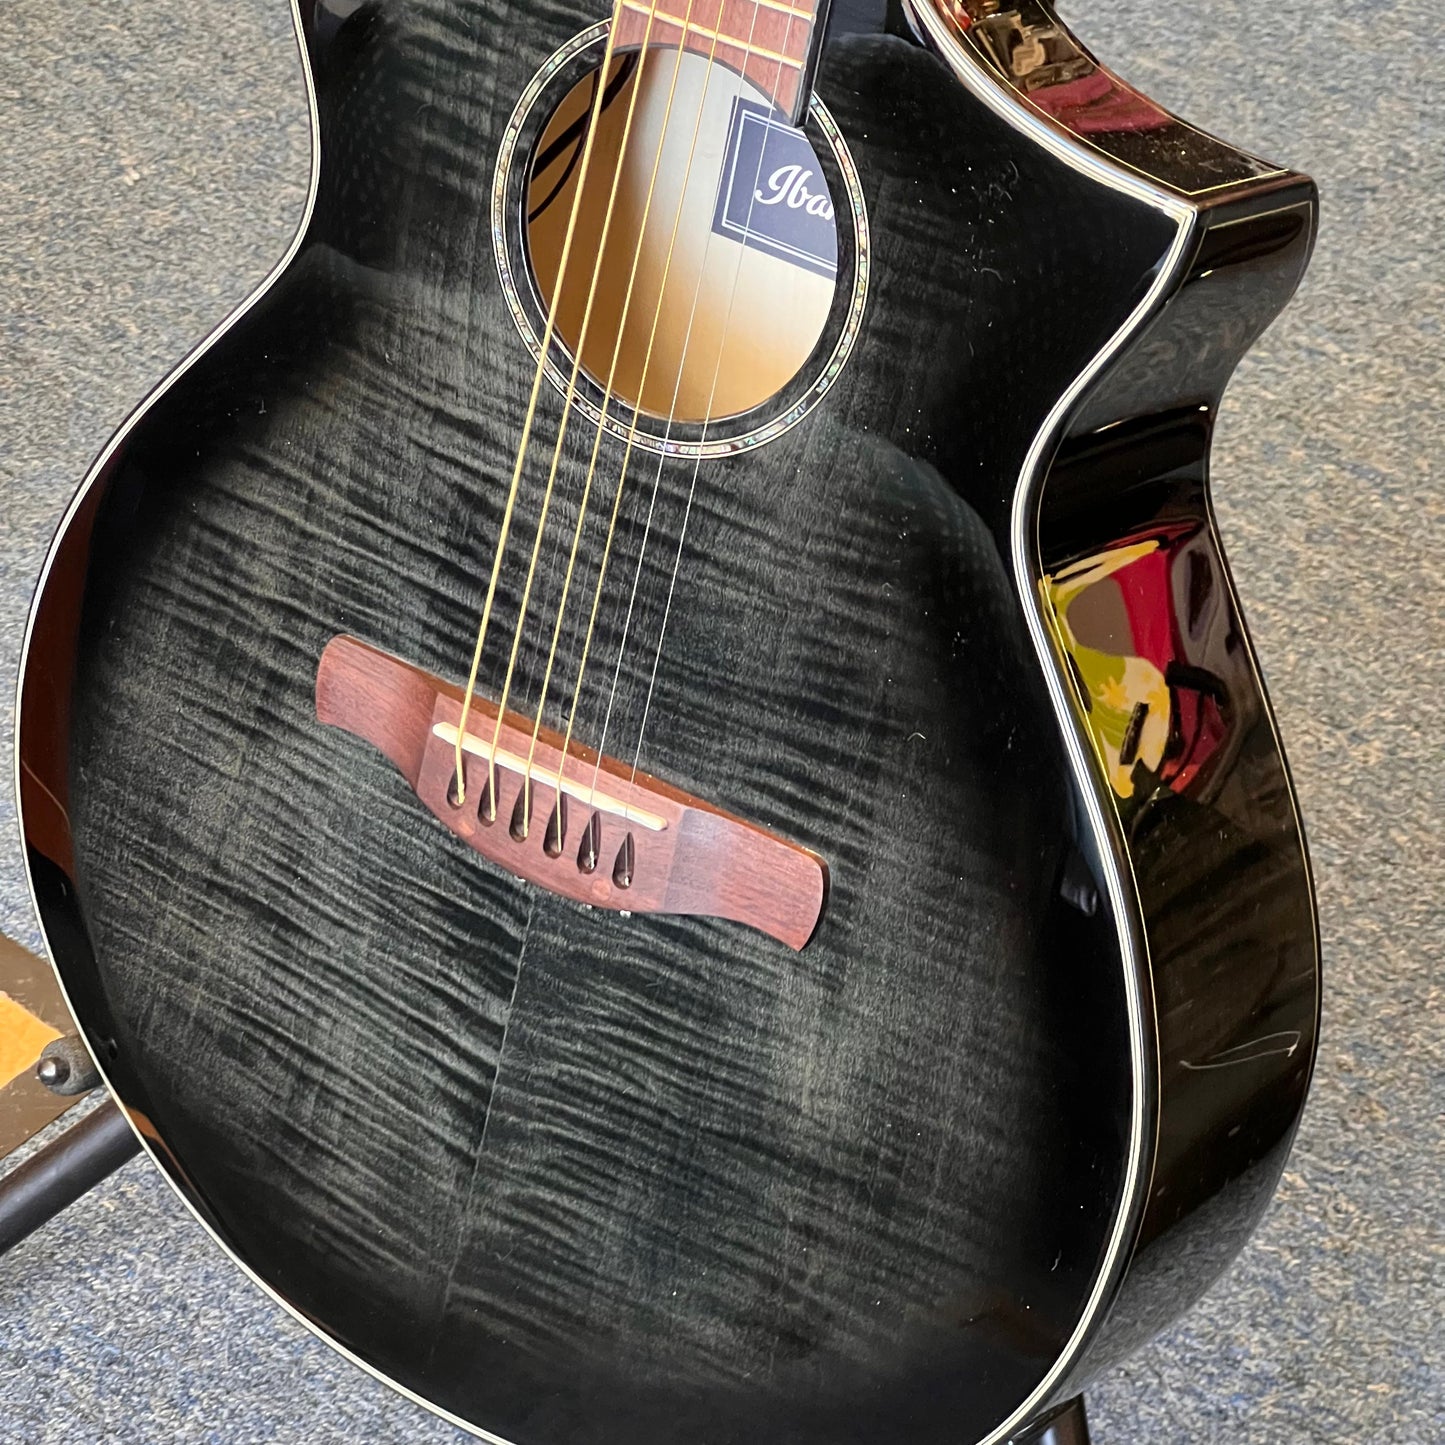 Ibanez AEWC400 Acoustic-Electric Guitar - Transparent Black Sunburst High Gloss